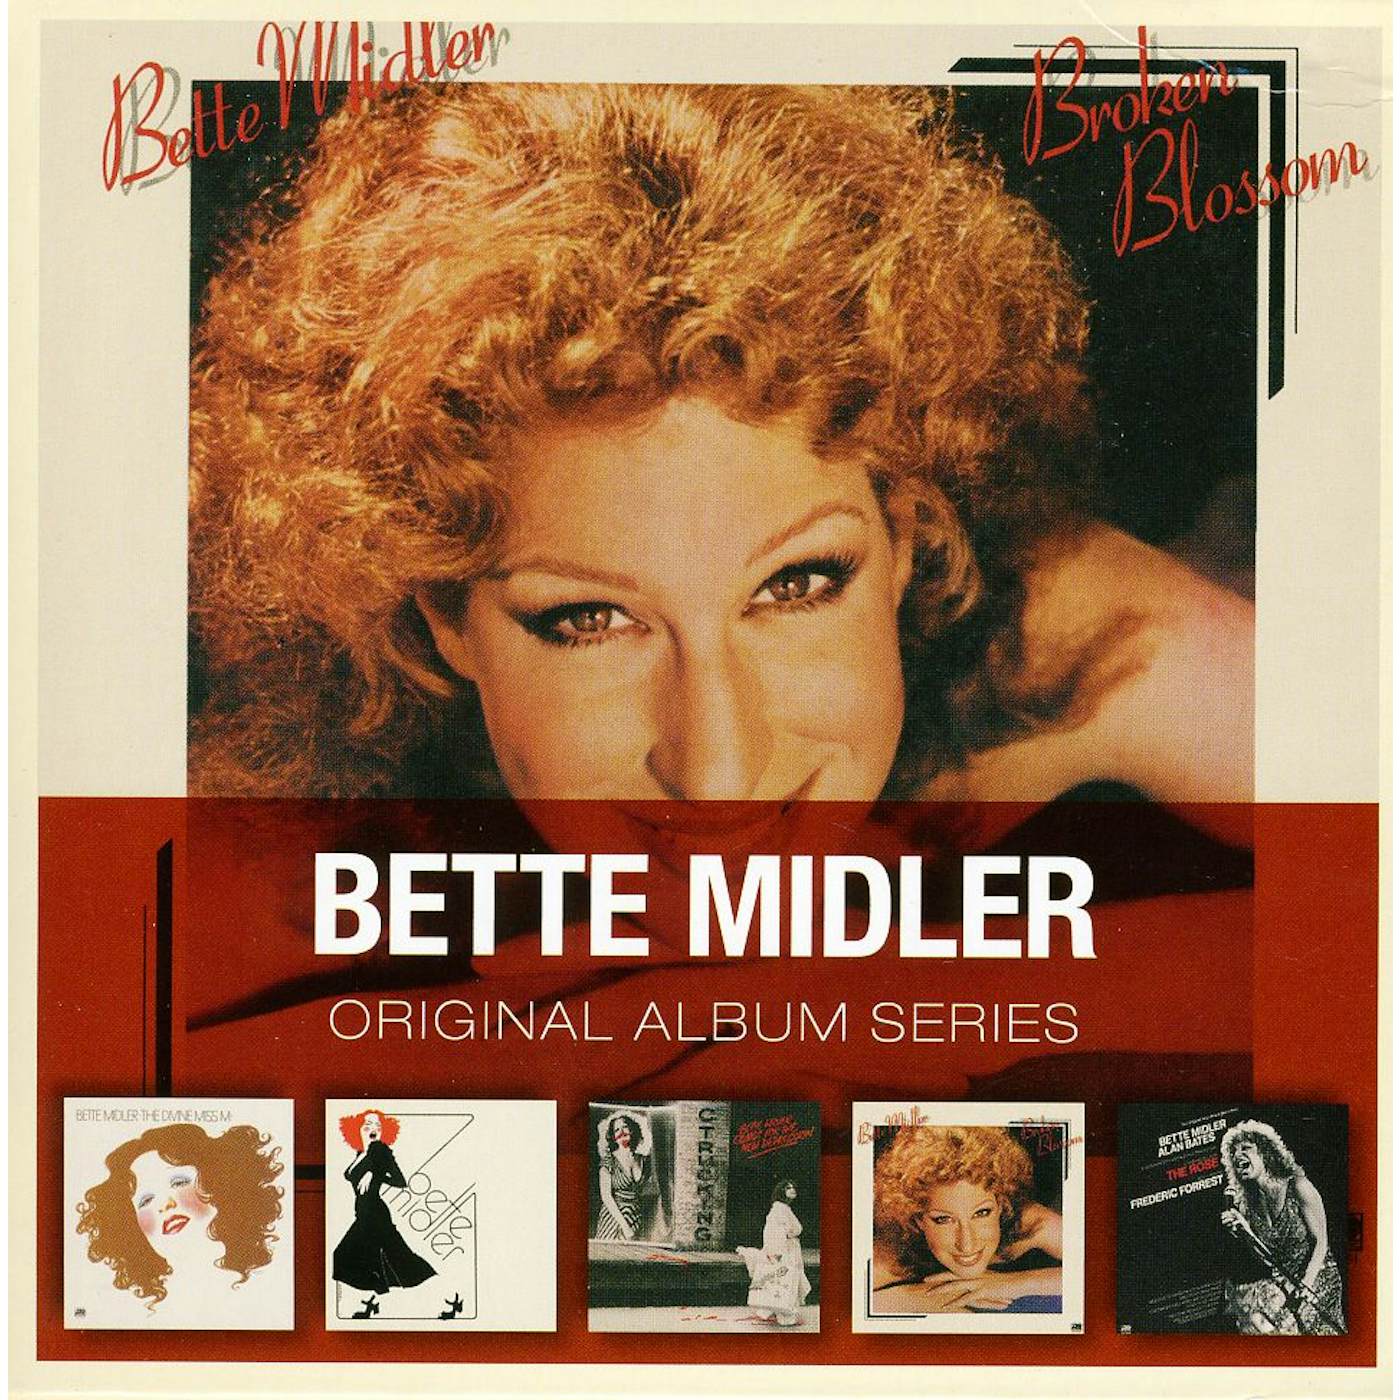 Bette Midler ORIGINAL ALBUM SERIES CD